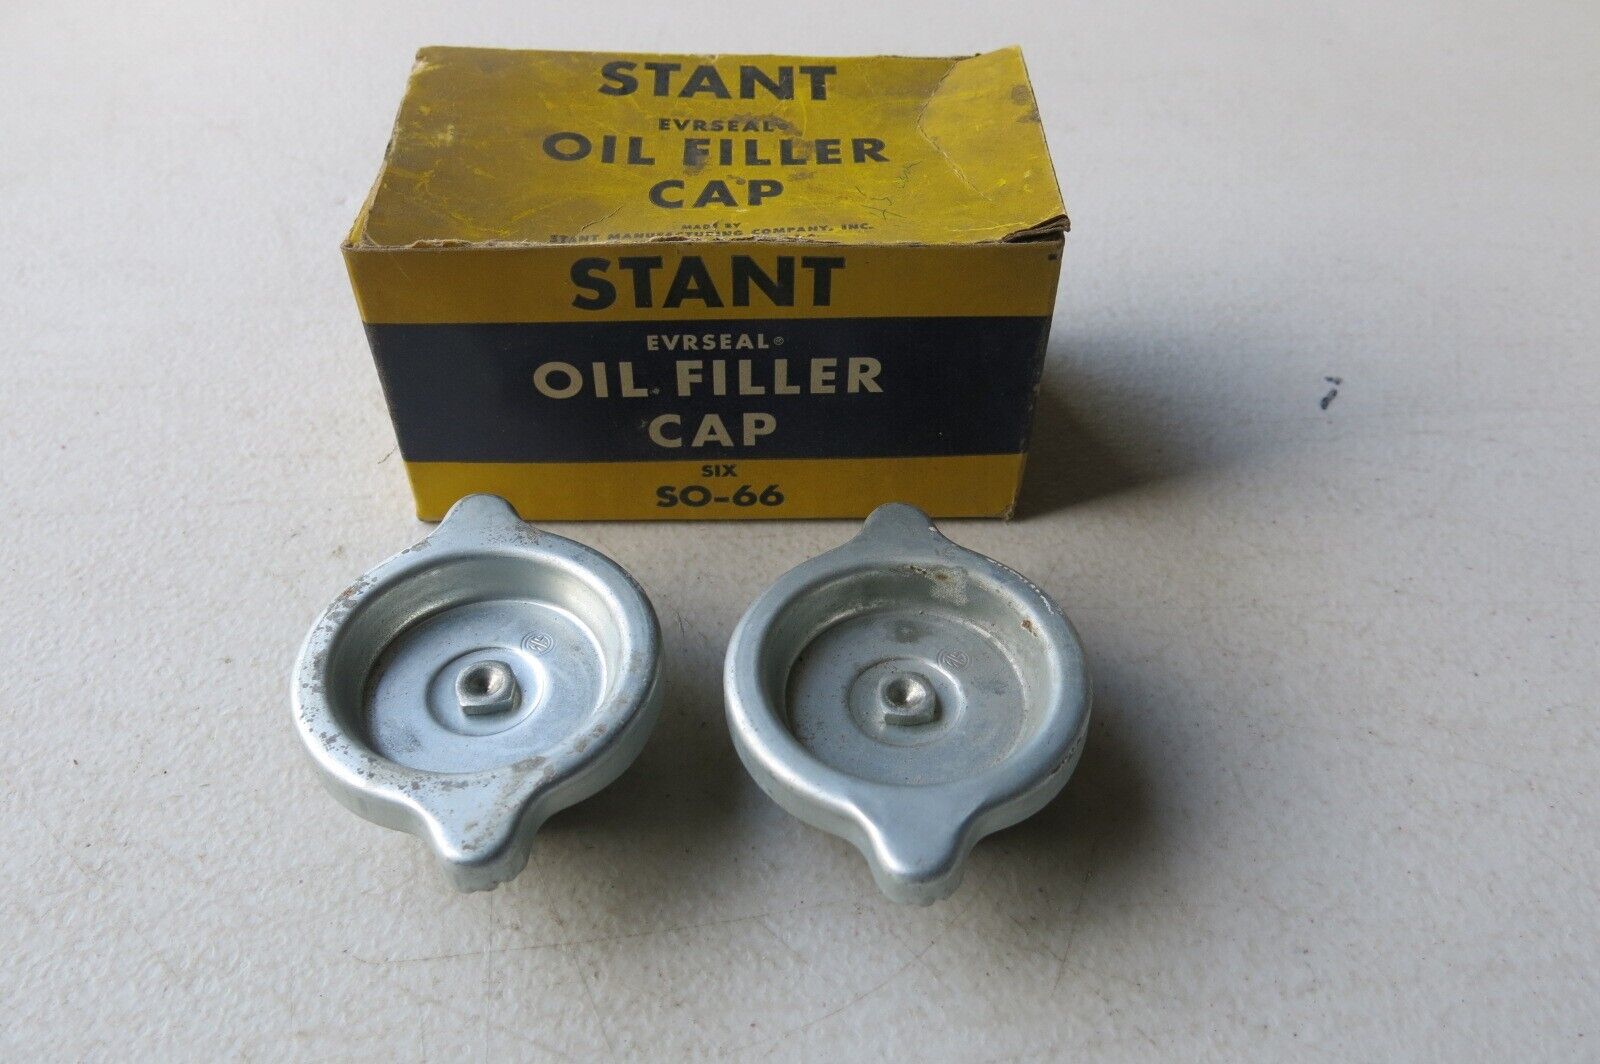 Vintage Stant SO-66 Oil Filler Cap (2) fits Chevrolet Trucks and Cars 1949-1958